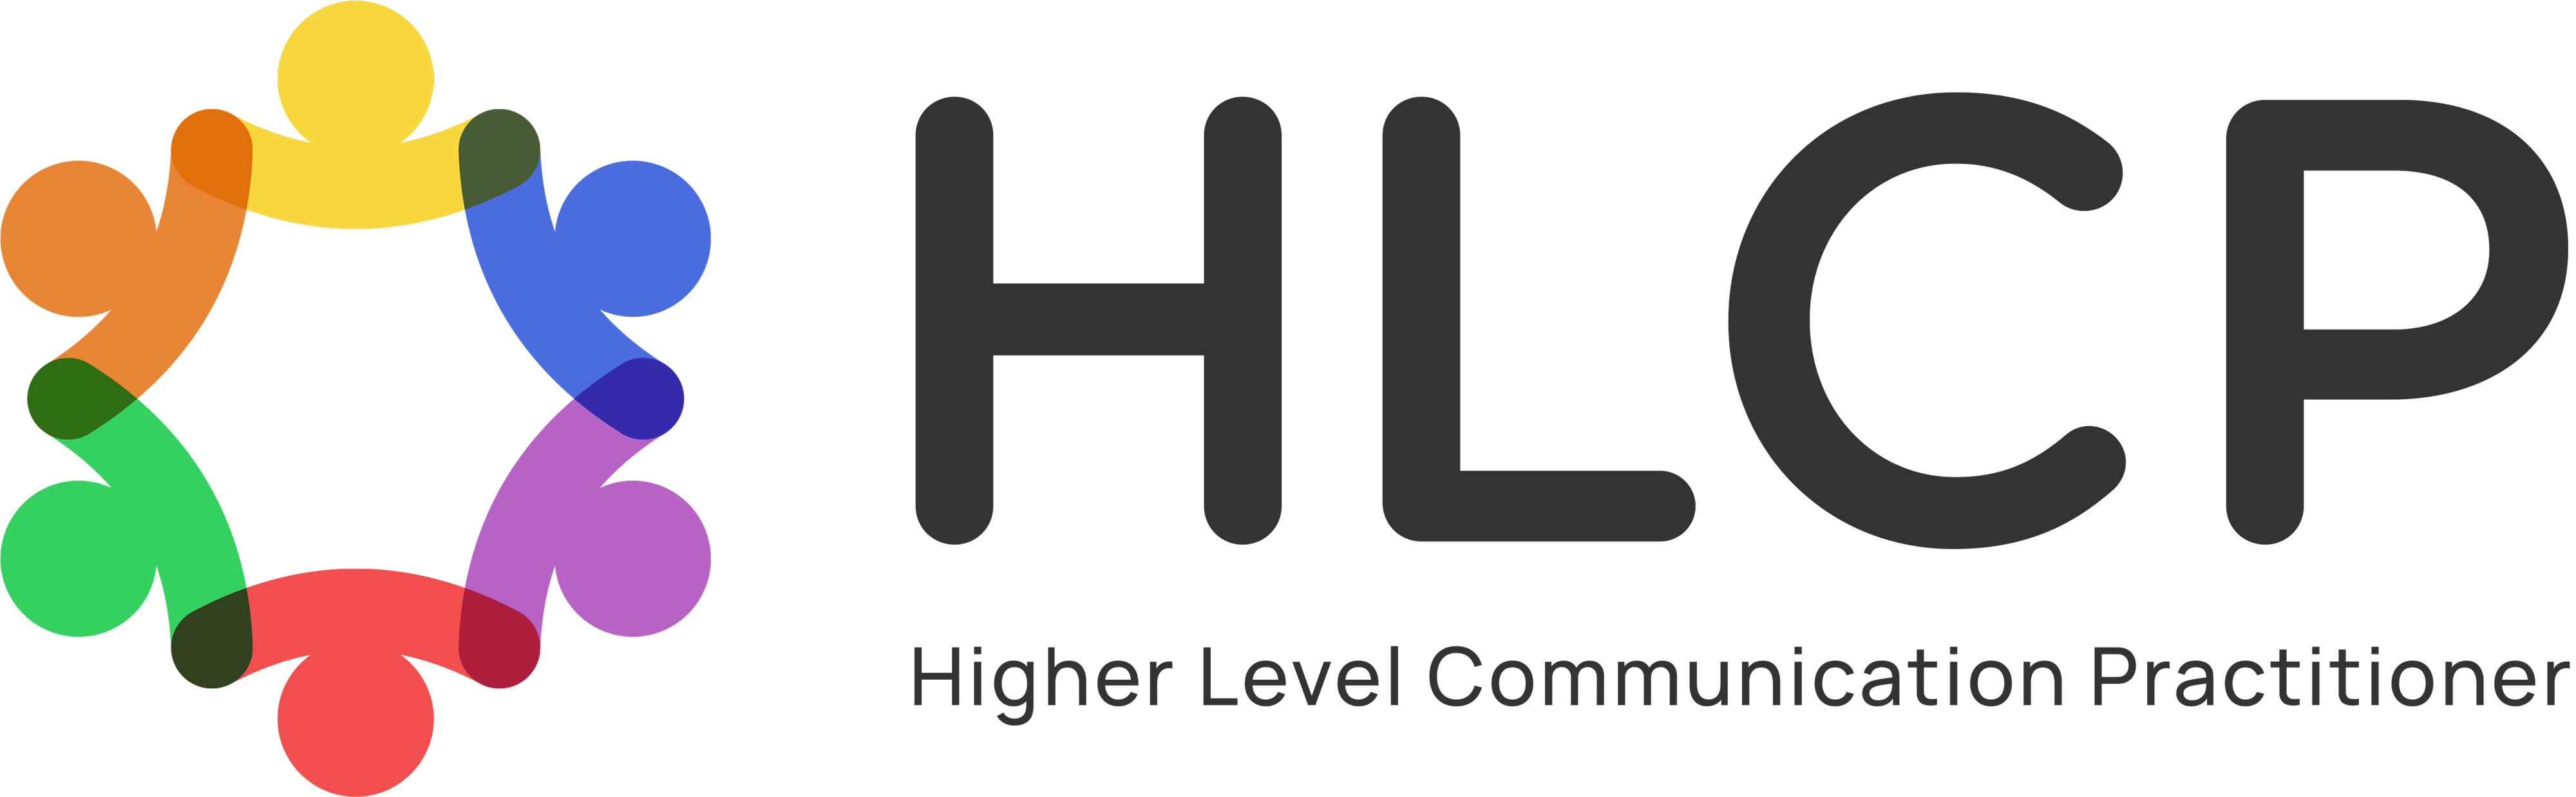 HLCP - Higher Level Communication Practitioner